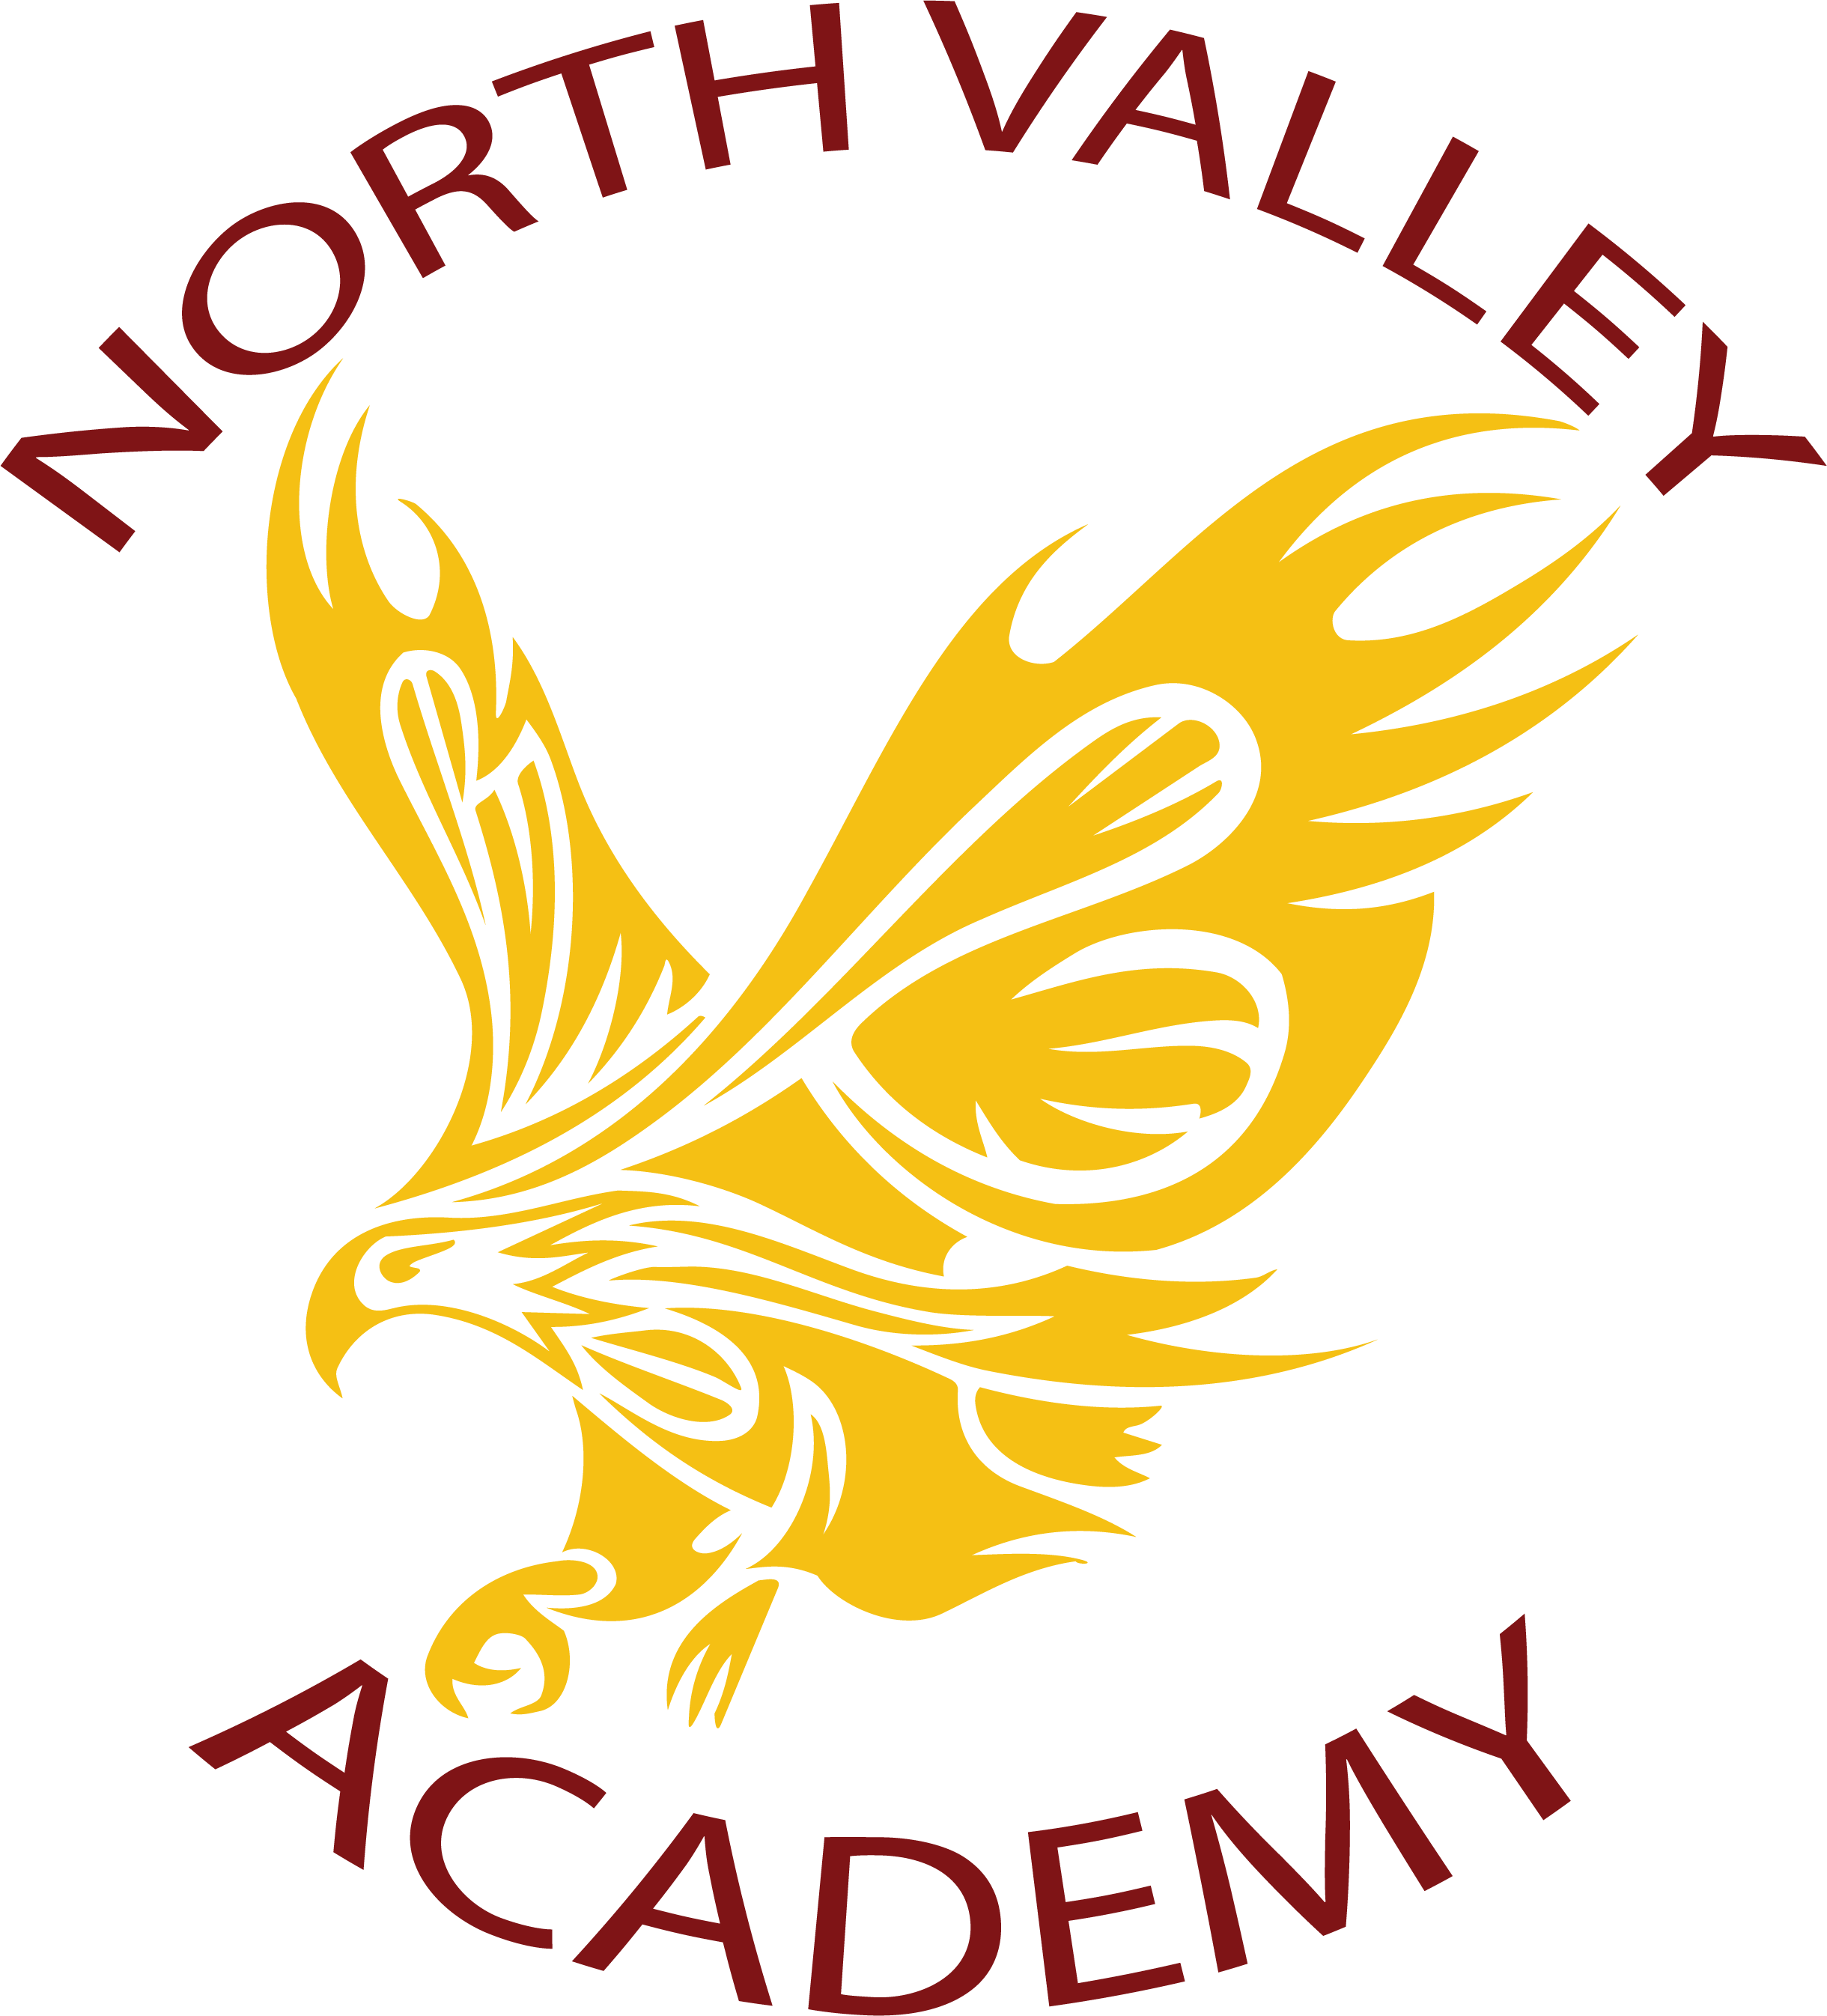 North Valley Academy Charter School logo